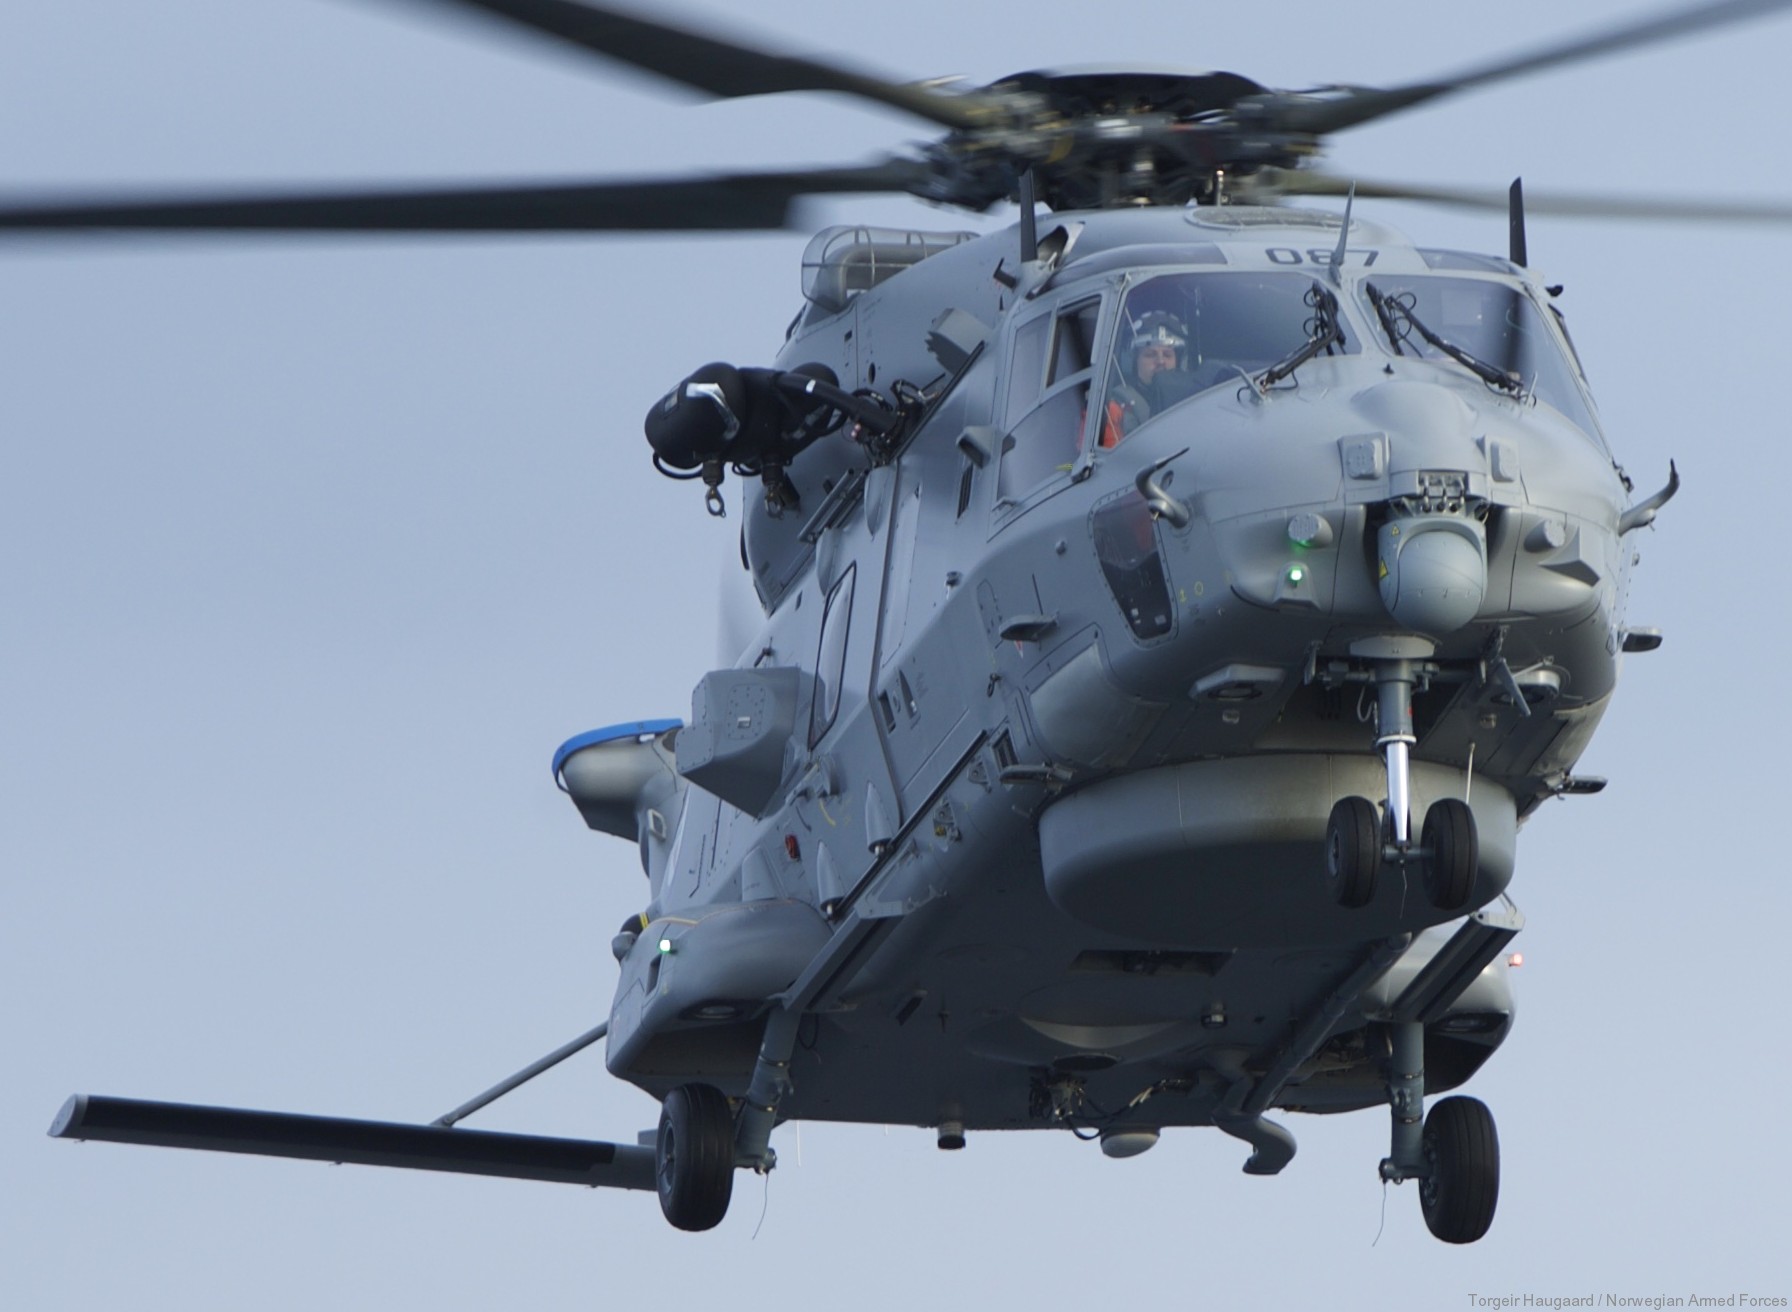 nh90 nfh asw helicopter royal norwegian coast guard navy air force kystvakt sjoforsvaret 087 05